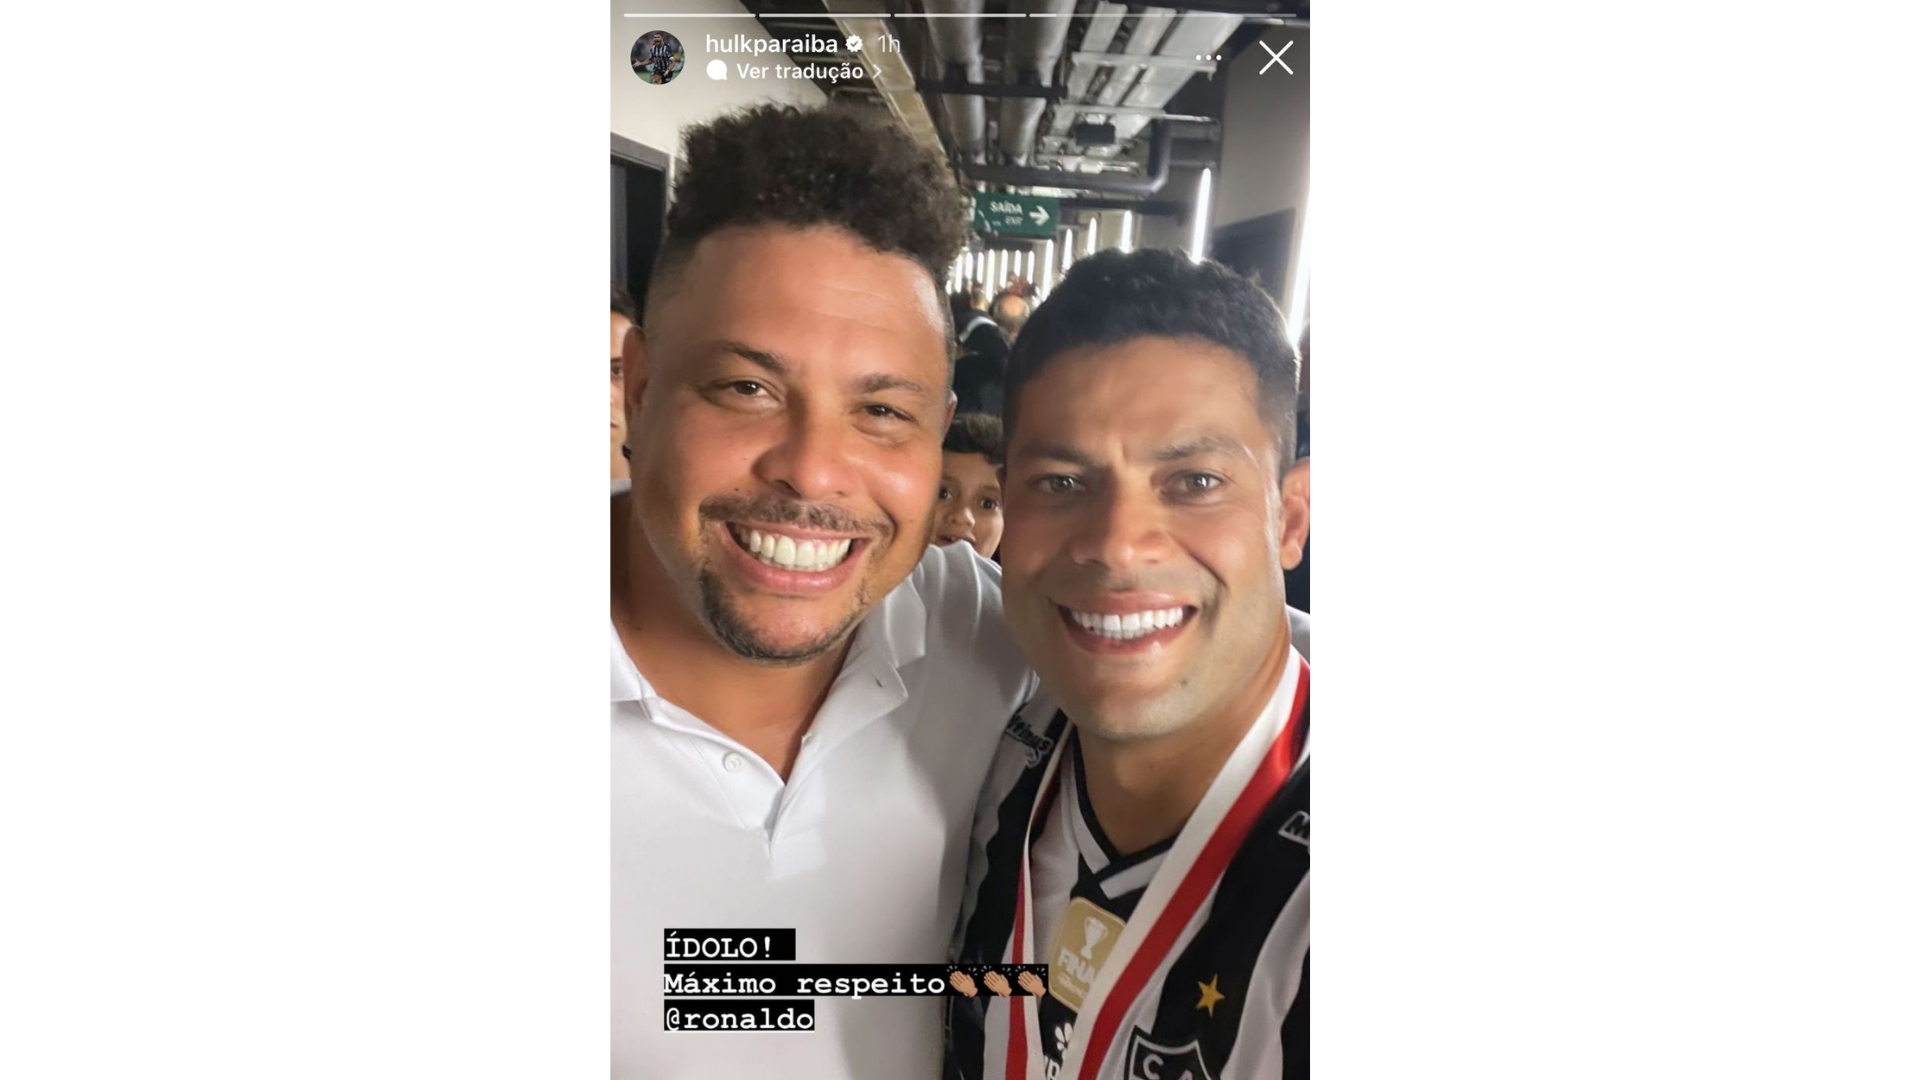 Hulk publica foto ao lado de Ronaldo Fenômeno